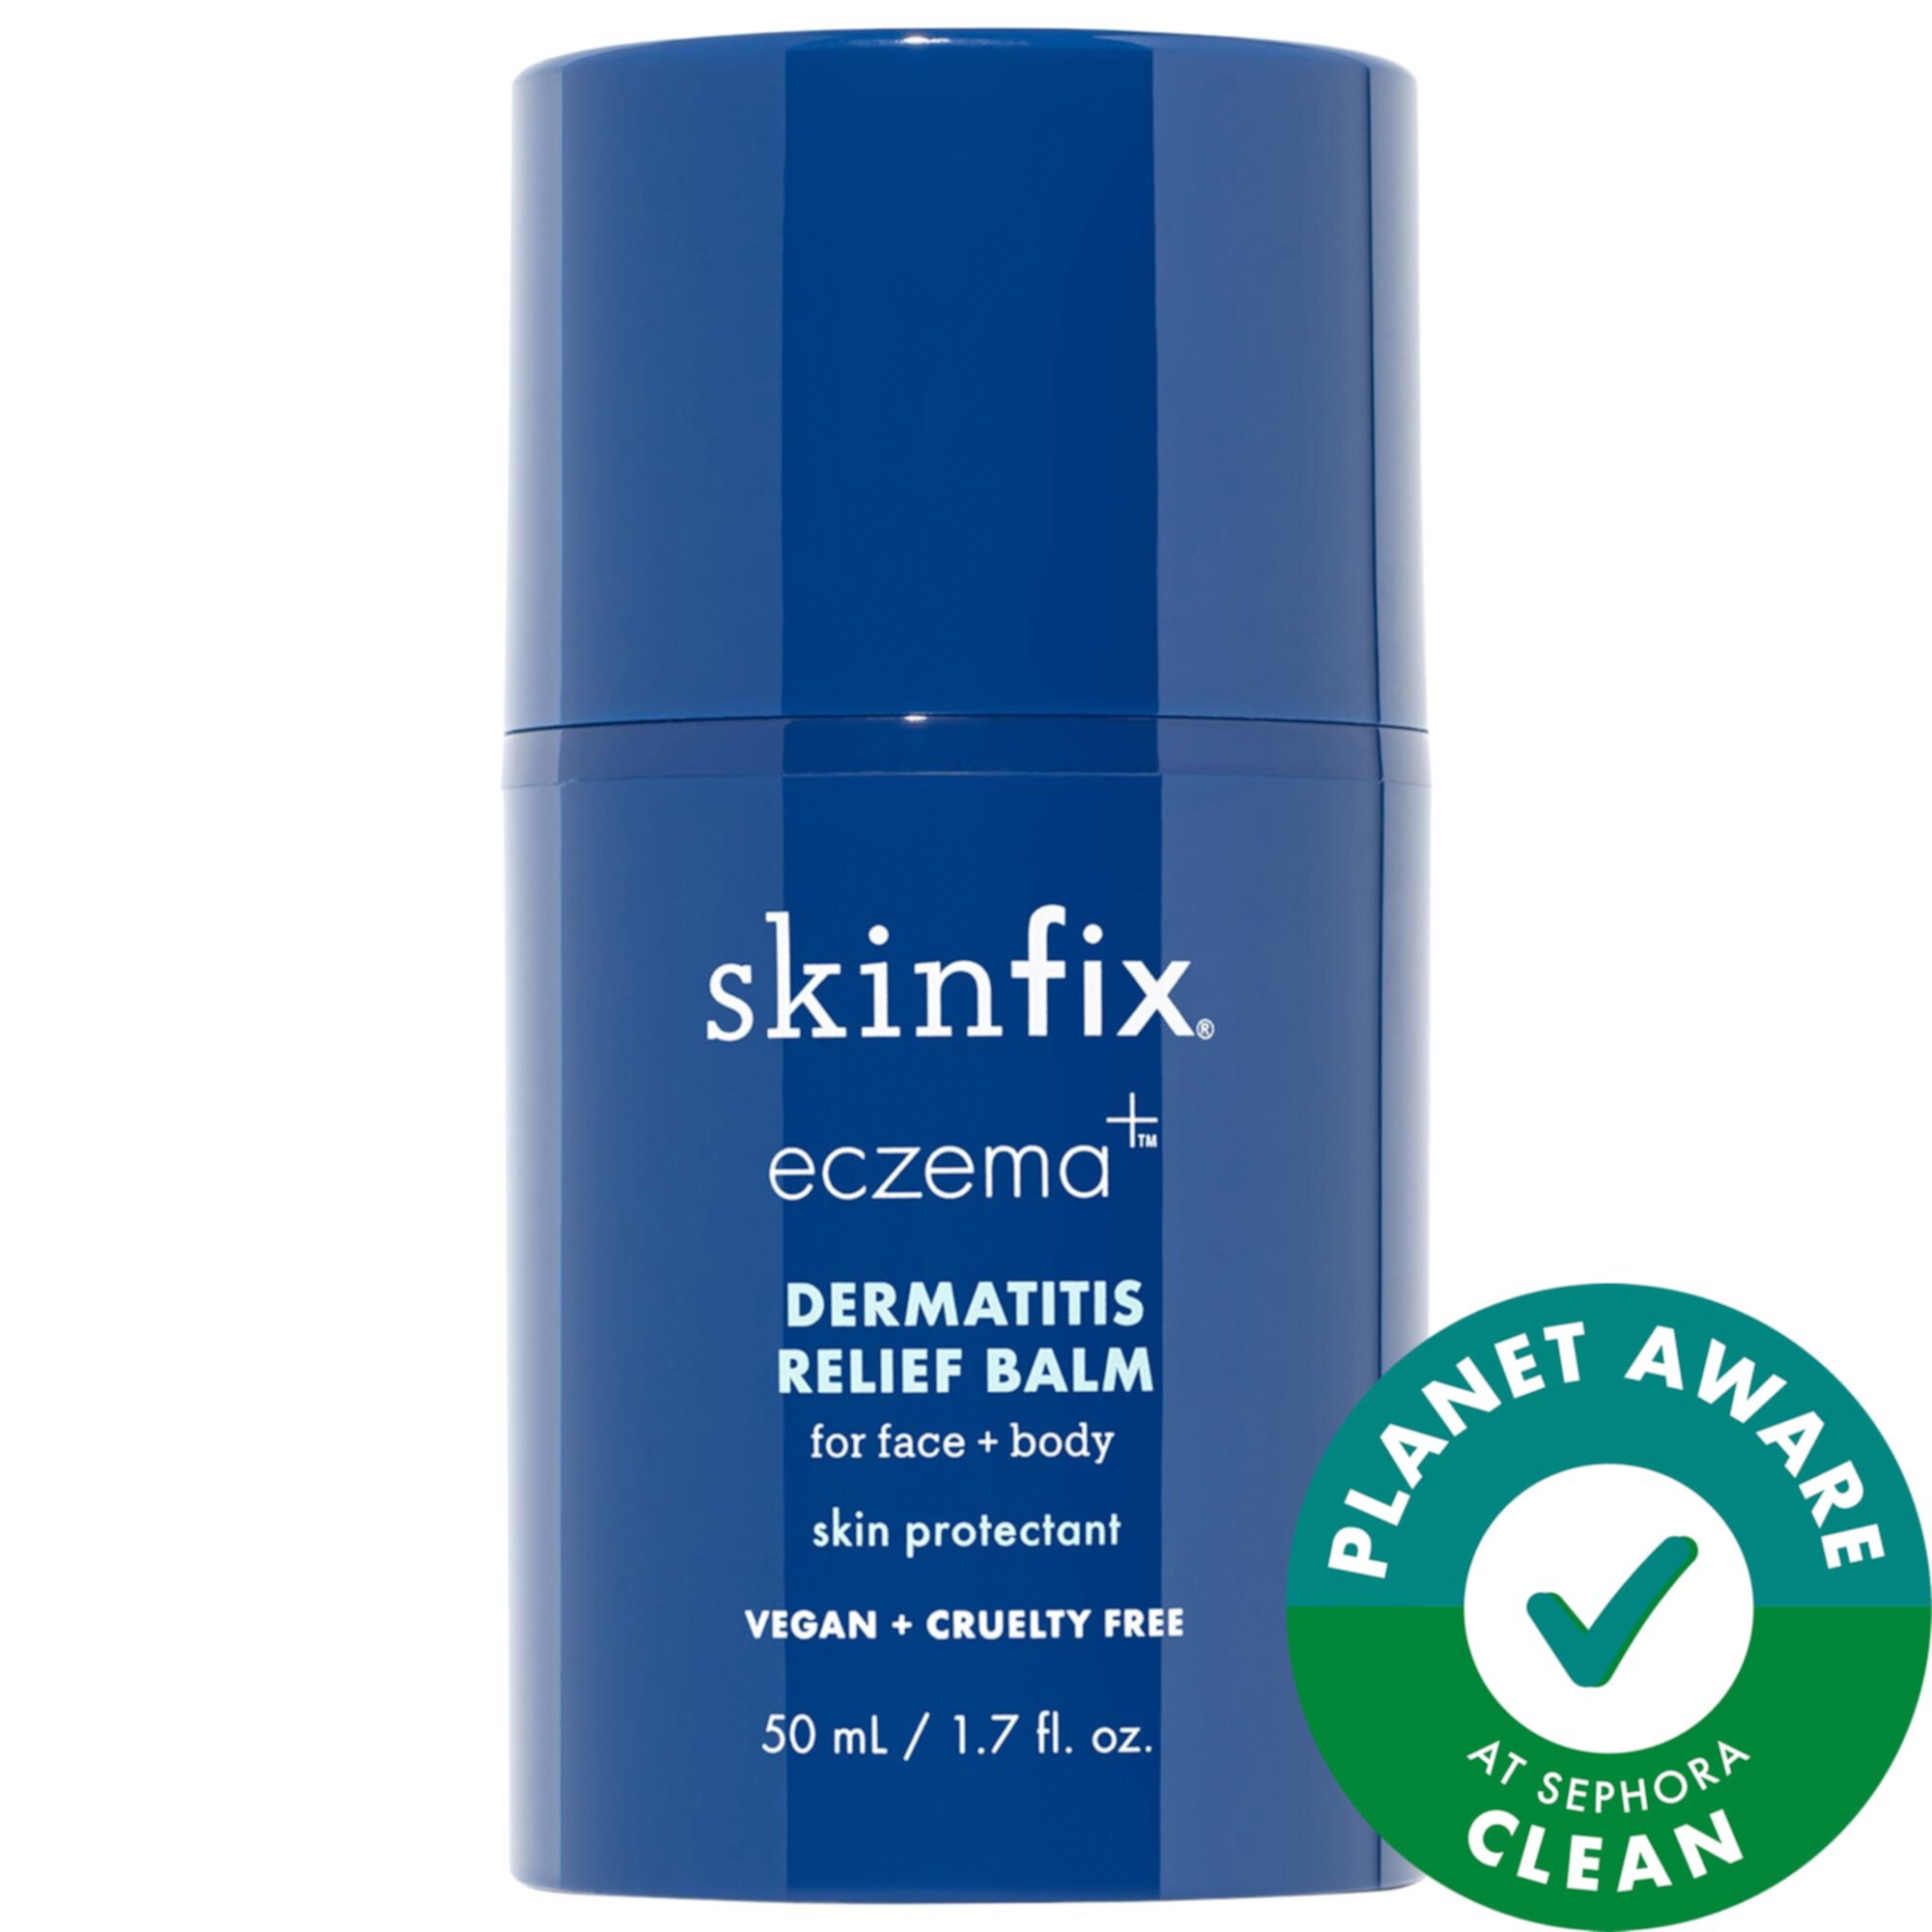 eczema+ Dermatitis Ceramide Face + Body Cream Skinfix